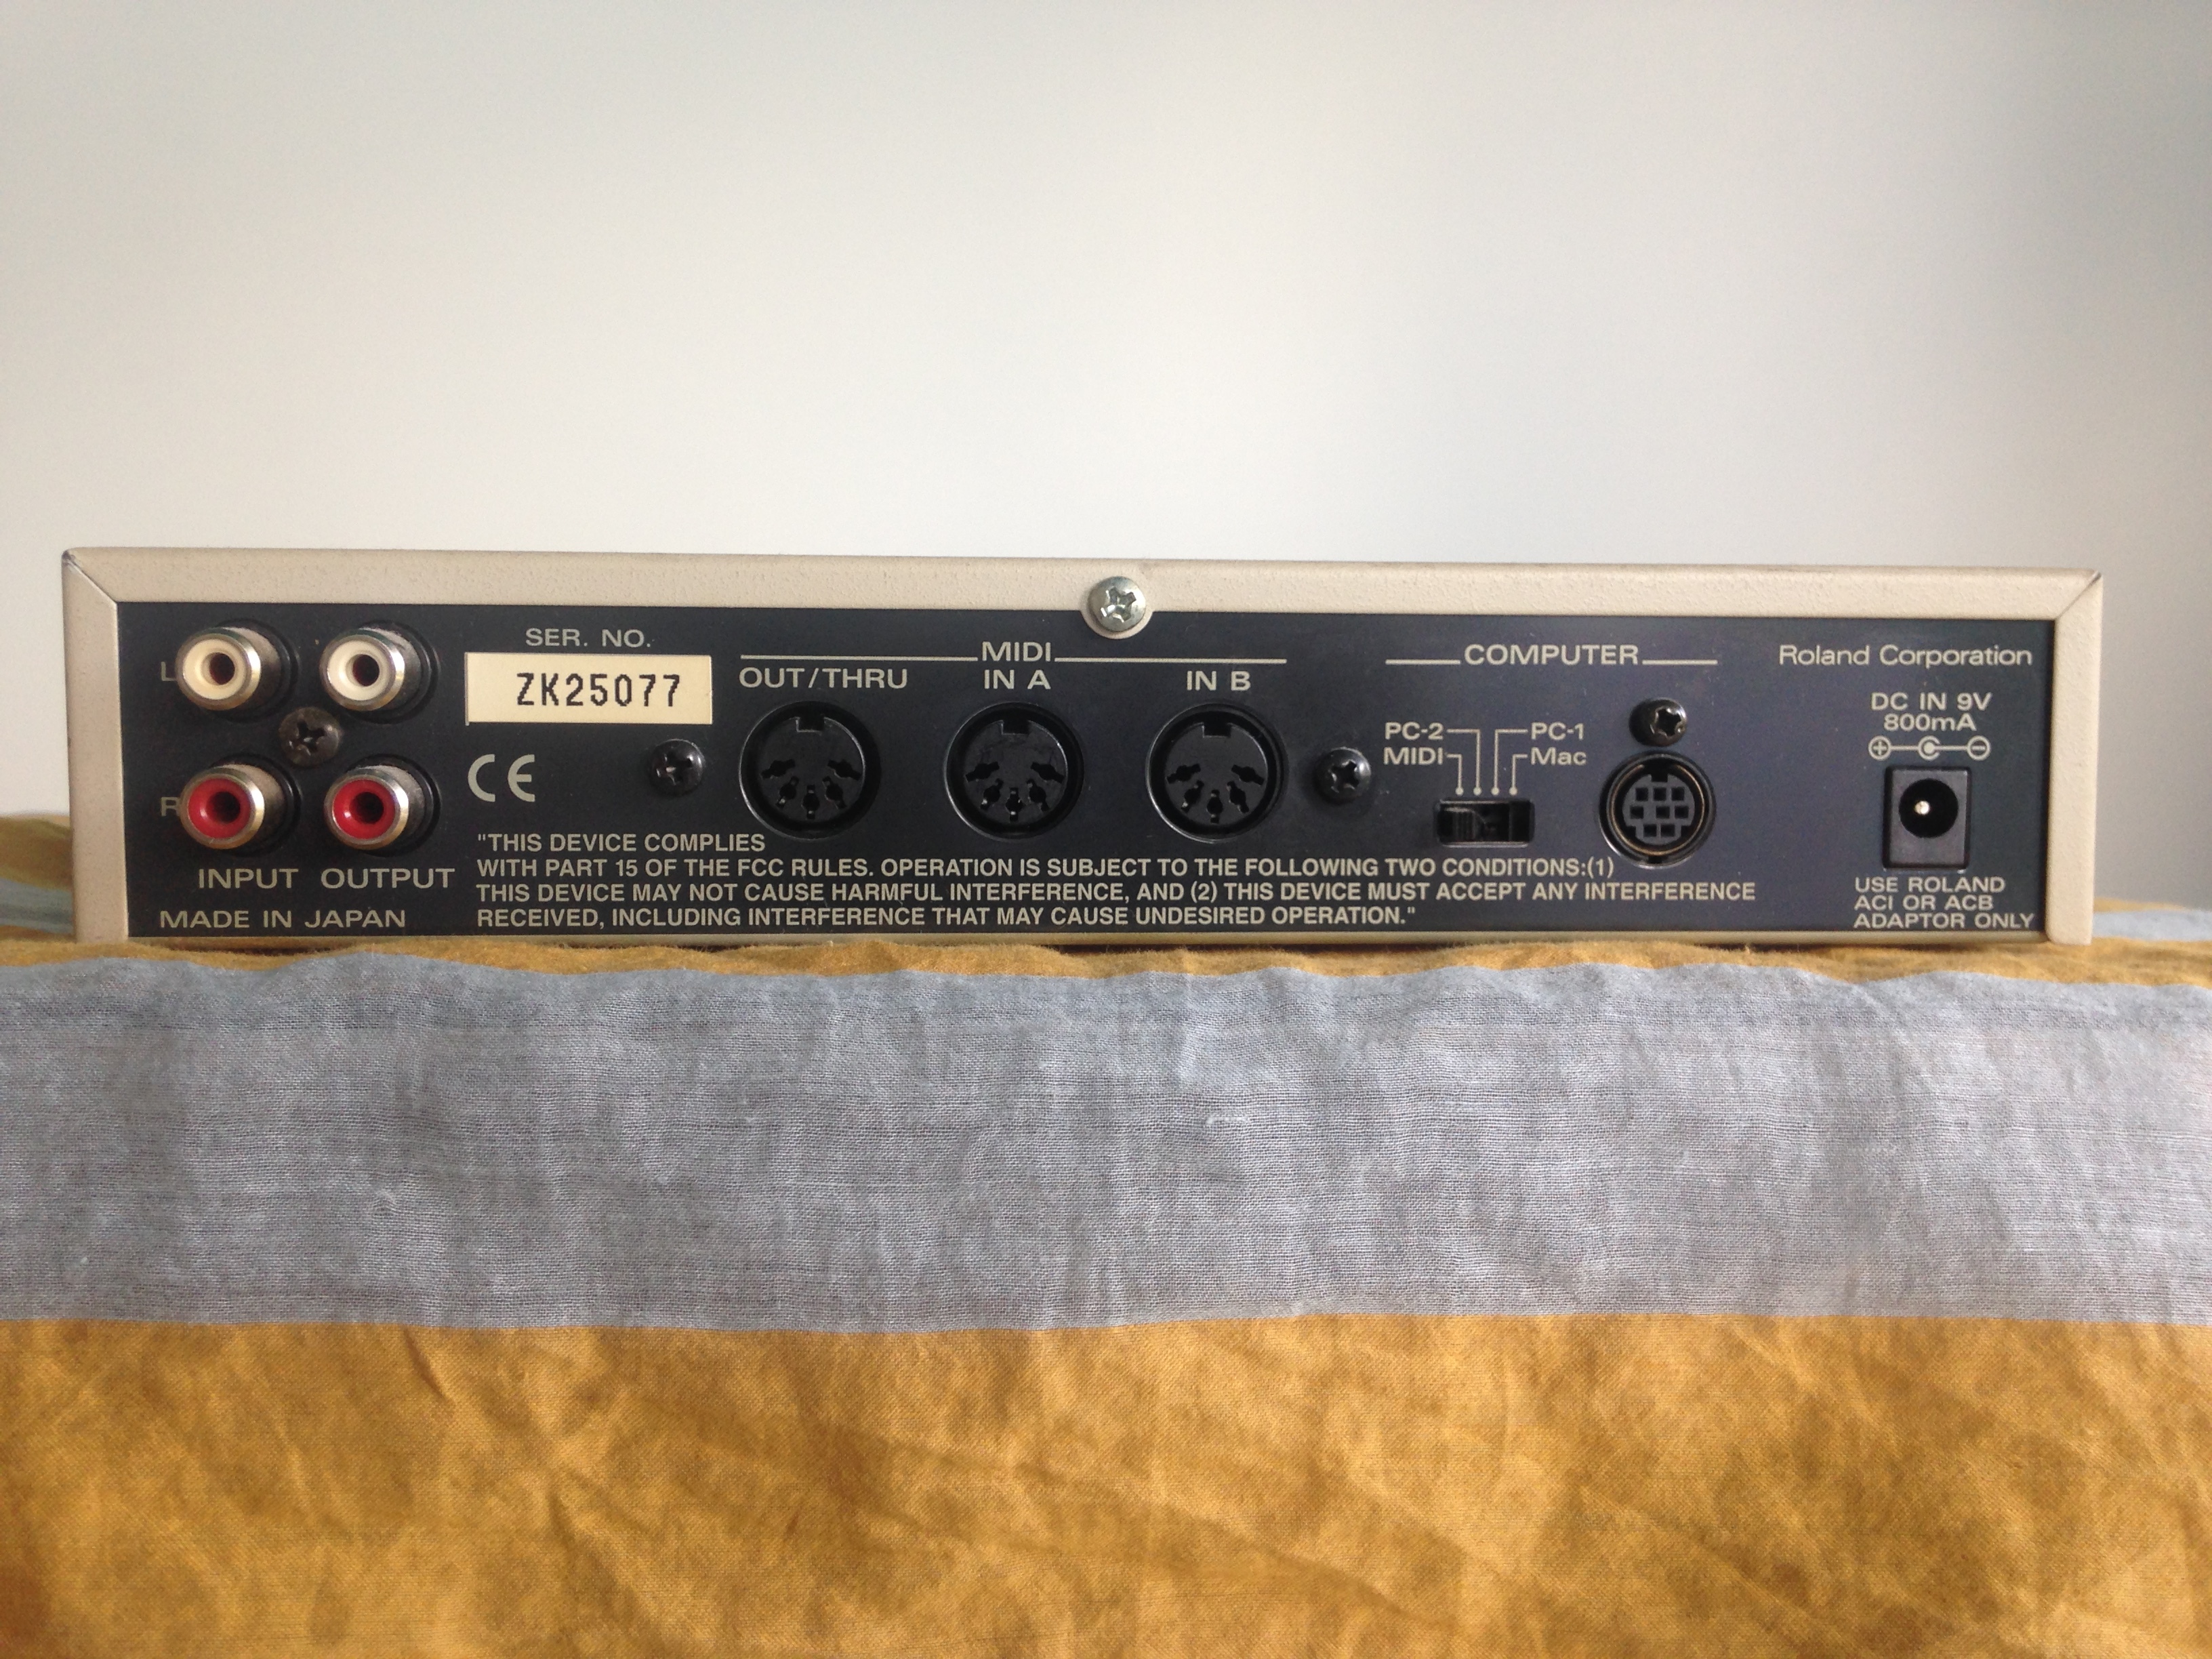 SC-88 VL - Roland SC-88 VL - Audiofanzine